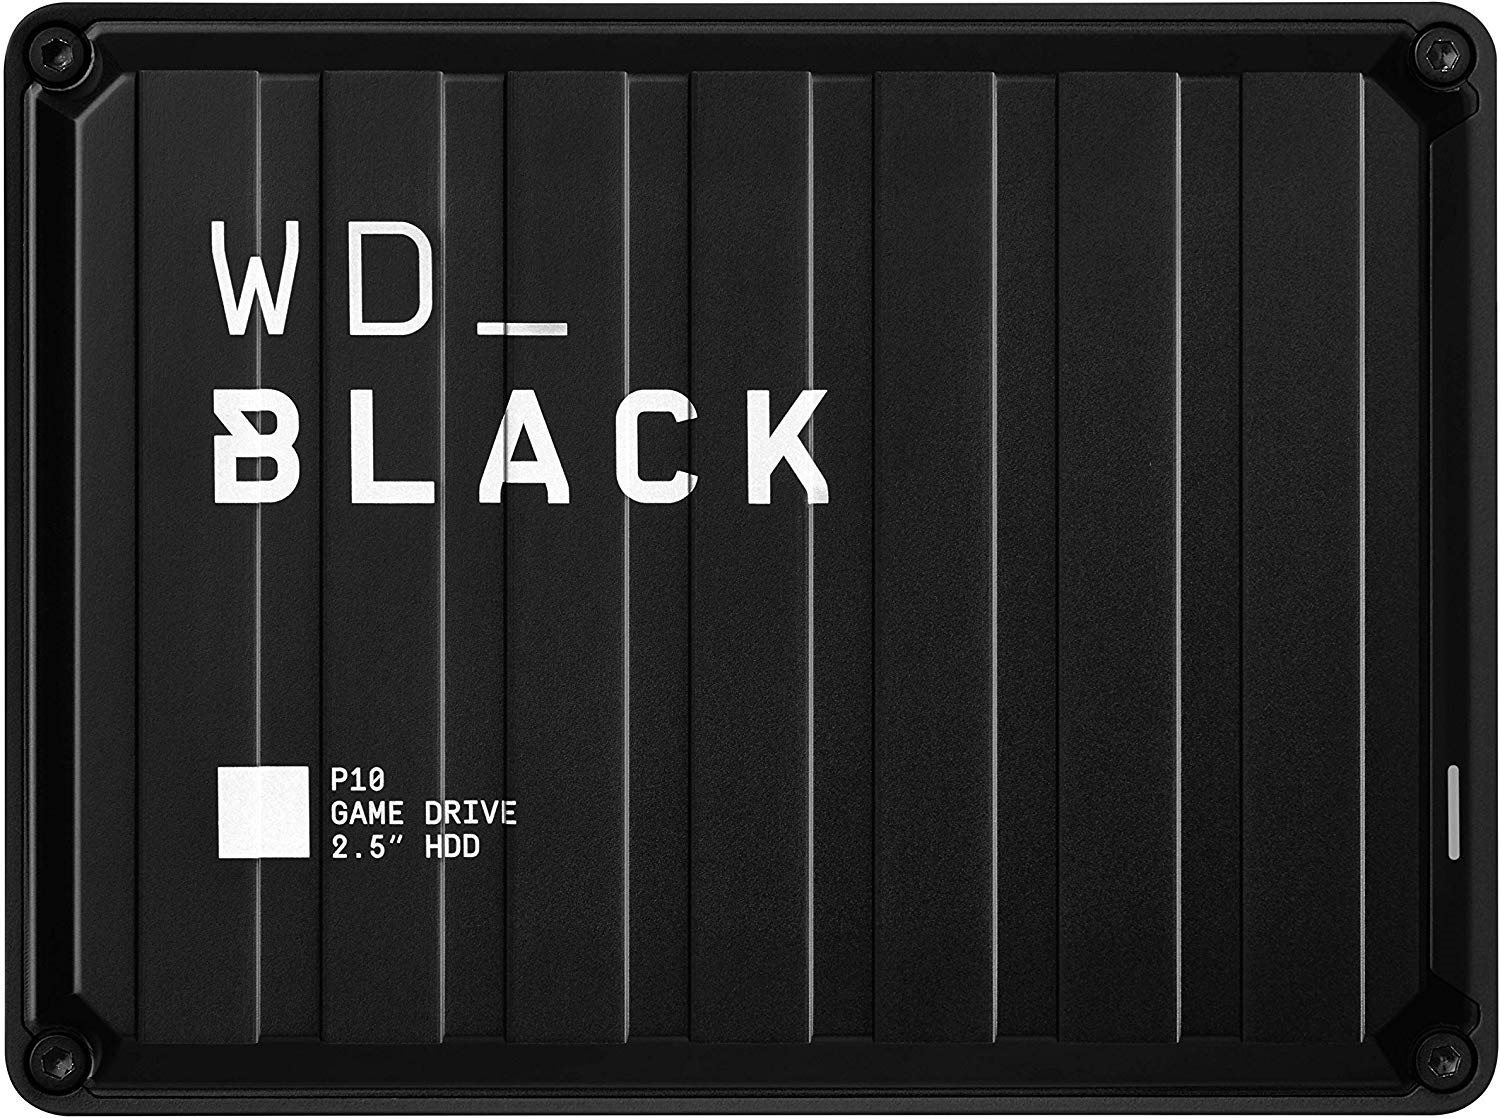 Külső merevlemez WD BLACK P10 Game Drive 4TB, fekete